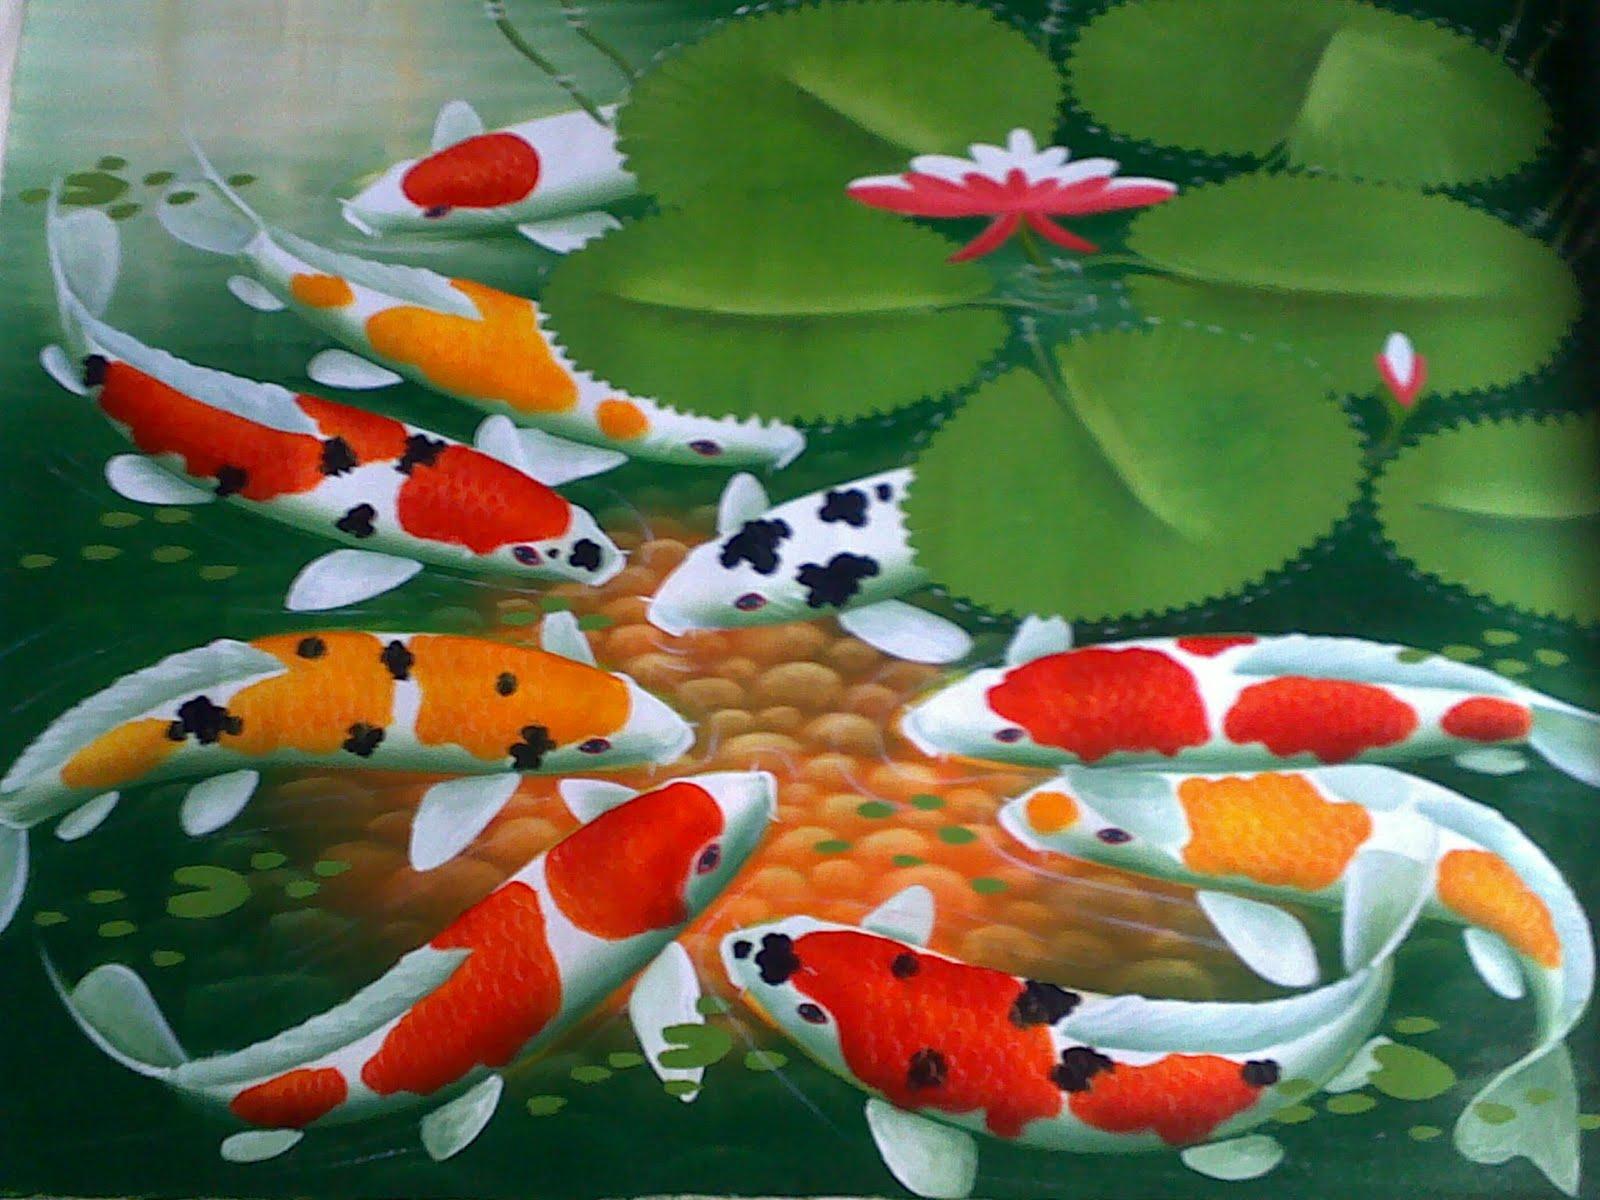 Wallpaper Tumblr Gif Water Stones And Koi Fish 3d Image Num 8